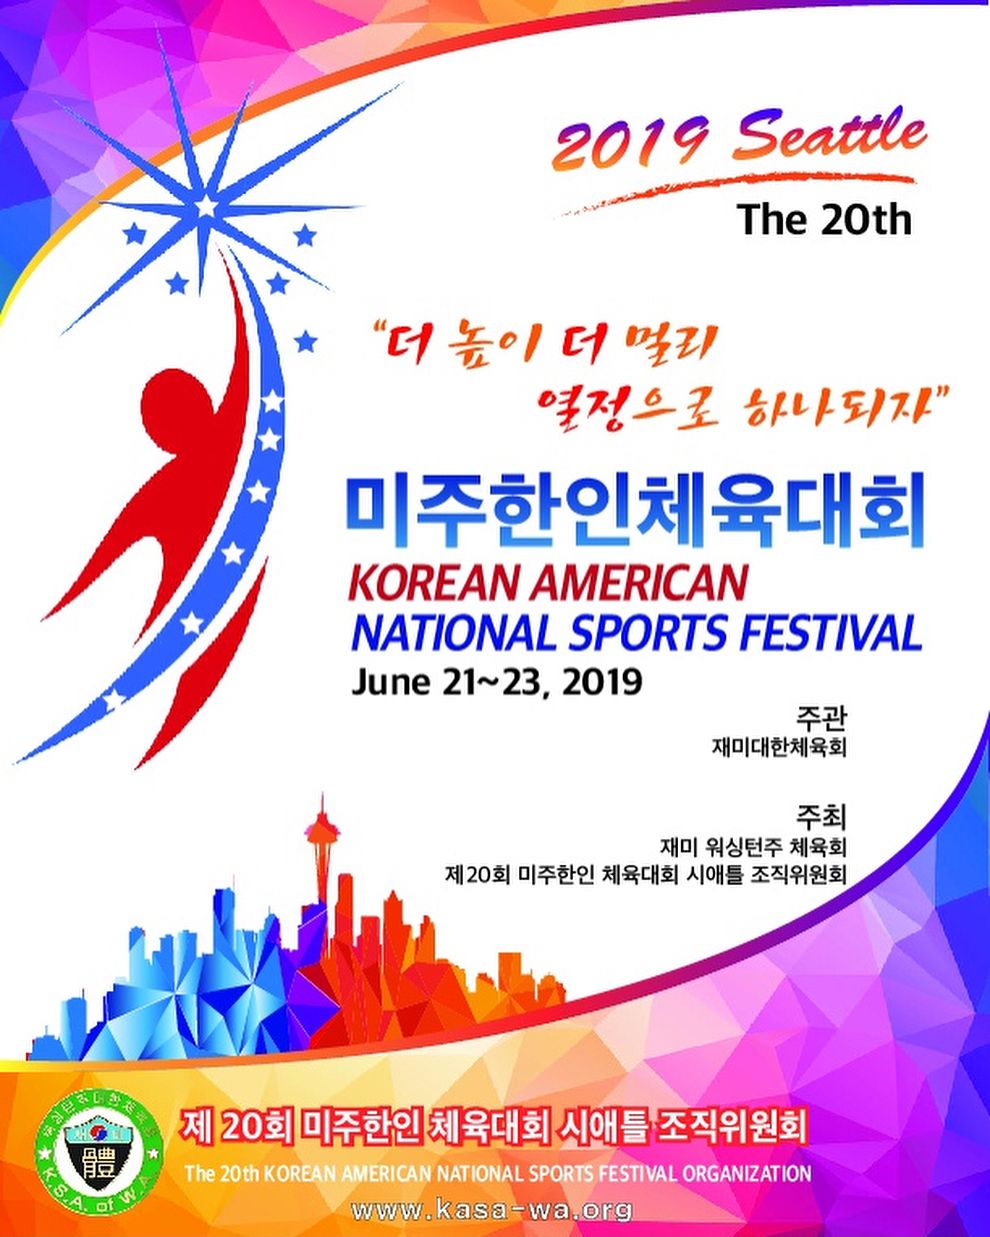 Korean American National Sports Festival Federal Way Tourism